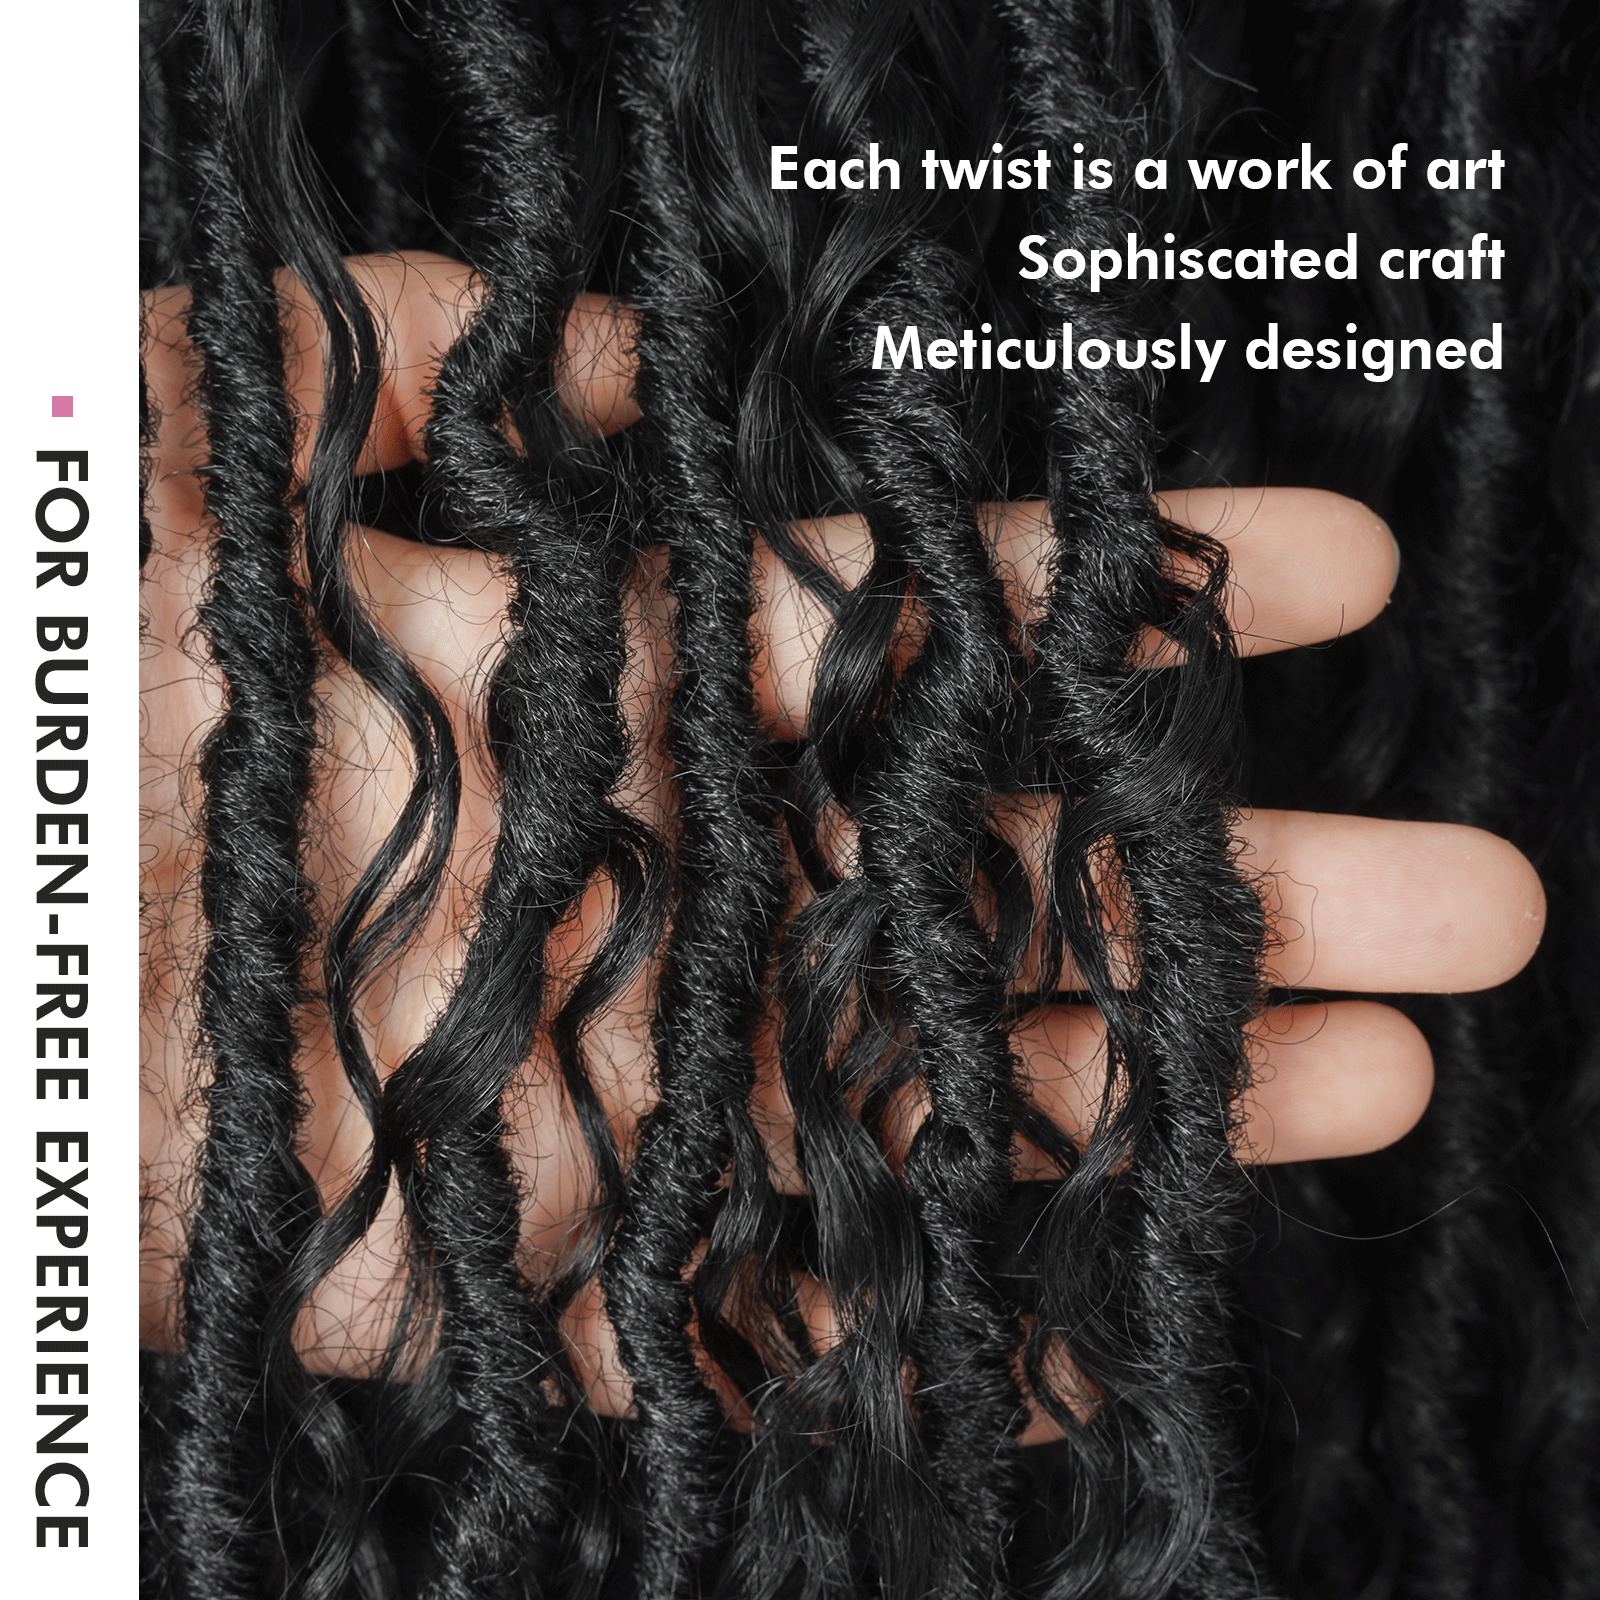 Toyotress Crochet Boho Locs Braiding Hair With Human Hair Curls Pre Looped Goddess Boho Dreadlocks Curly Full Ends Hair Extensions